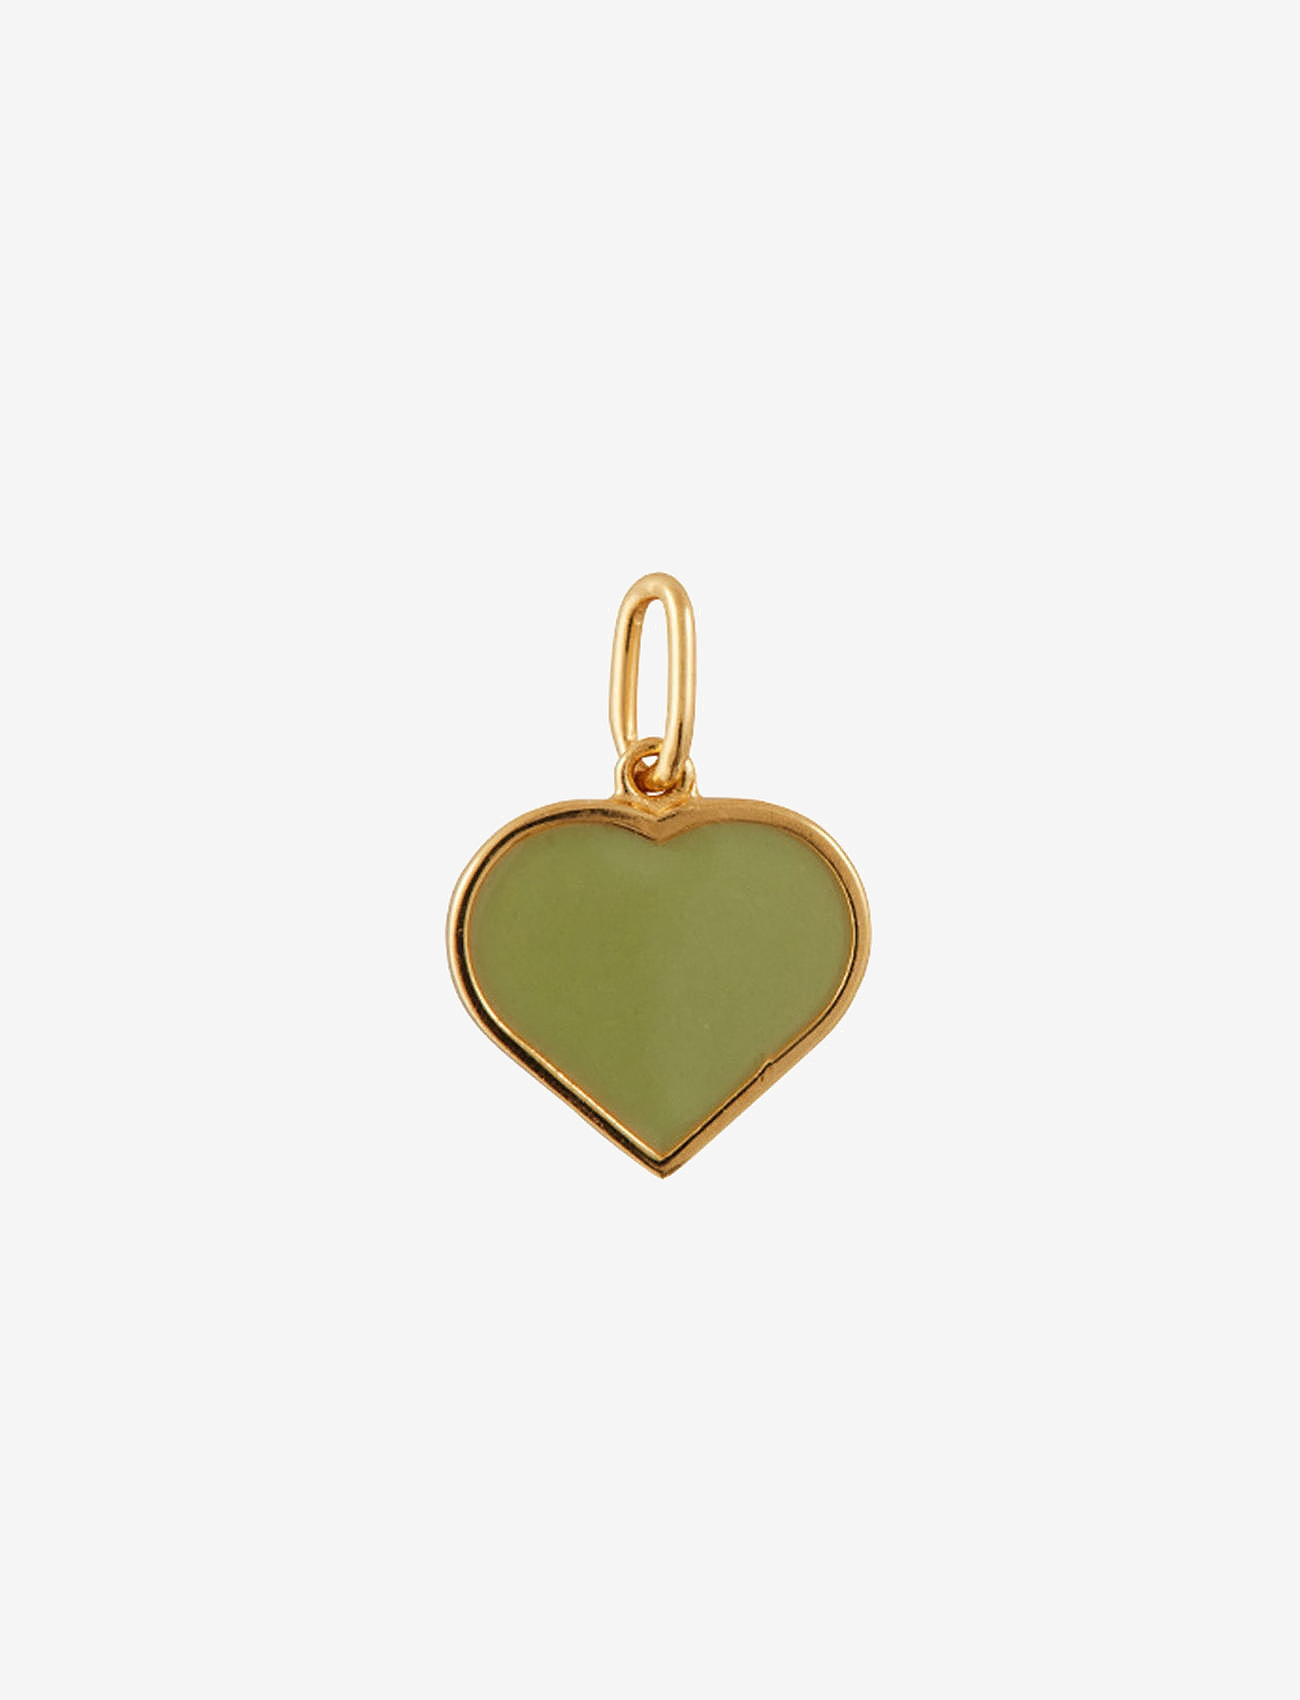 Design Letters - Big Heart Enamel Charm Gold (12mm) - peoriided outlet-hindadega - crispy green 5793c - 0